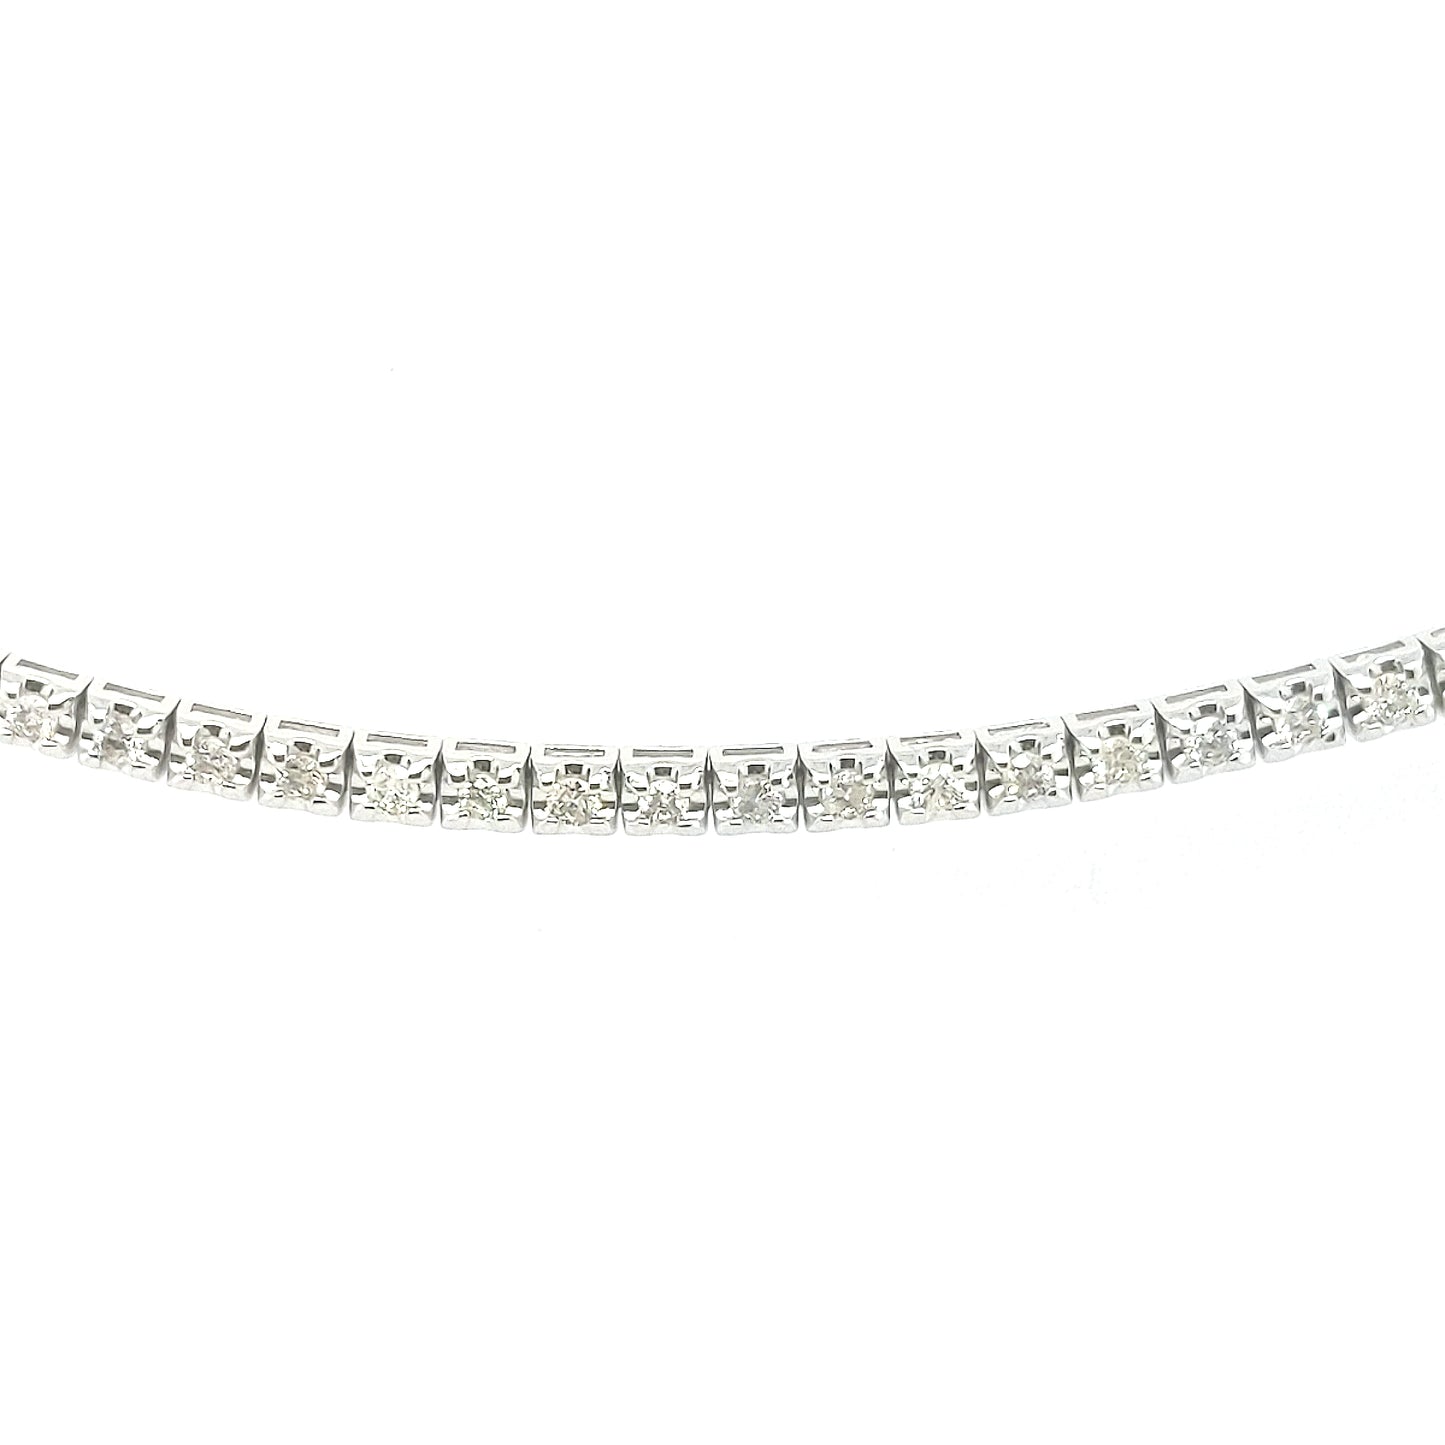 14K Gold And Diamond Tennis Bracelet - HK Jewels